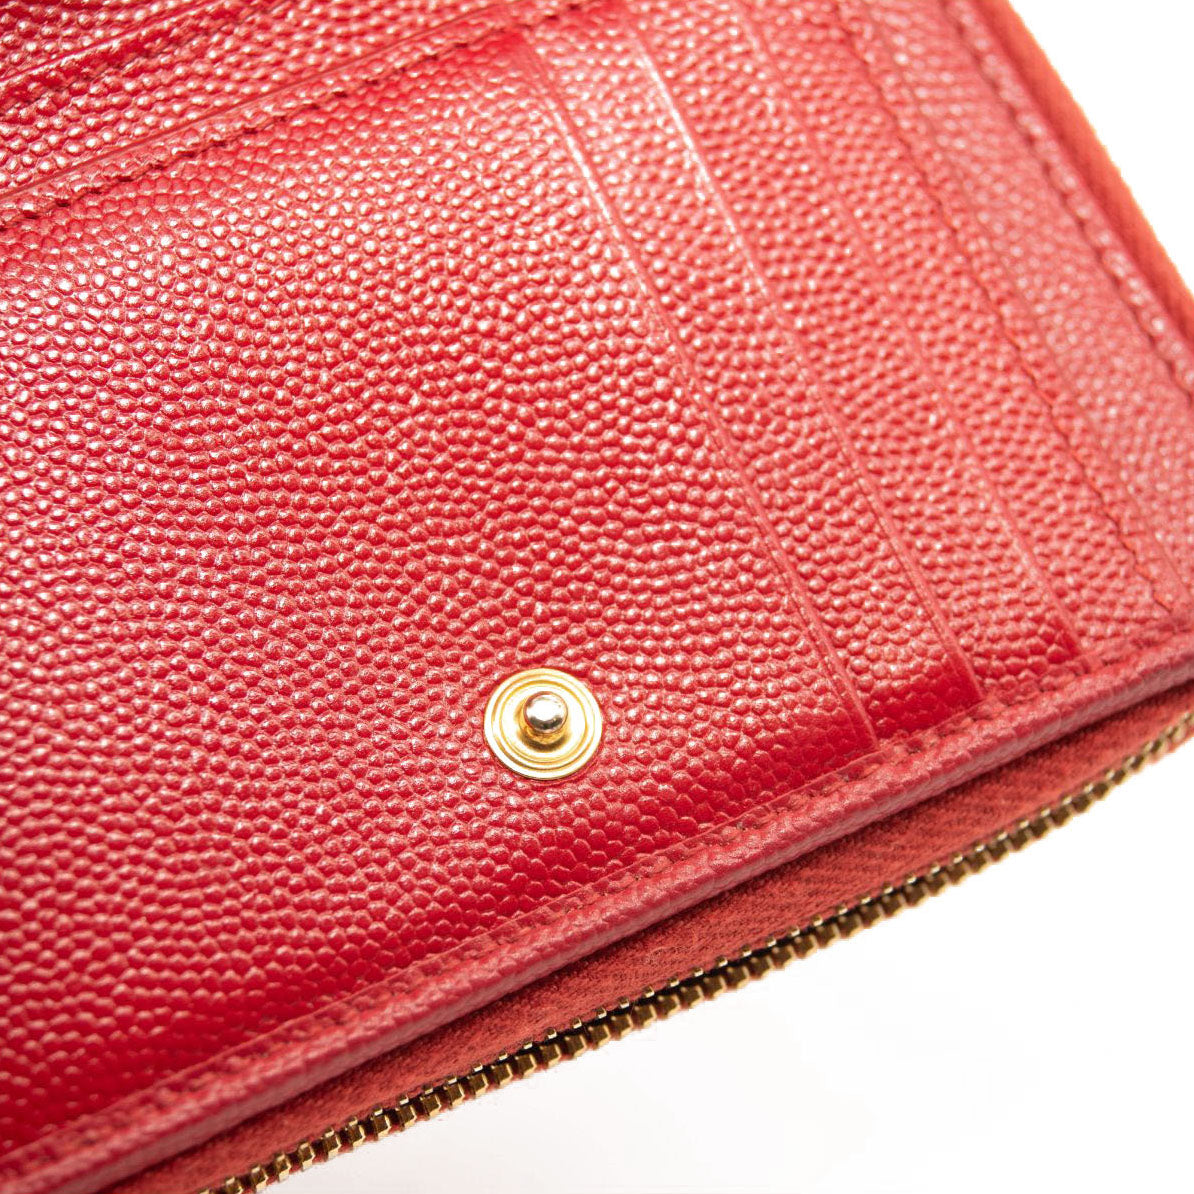 Saint Laurent 'Monogram' Zip Around Quilted Calfskin Leather Wallet